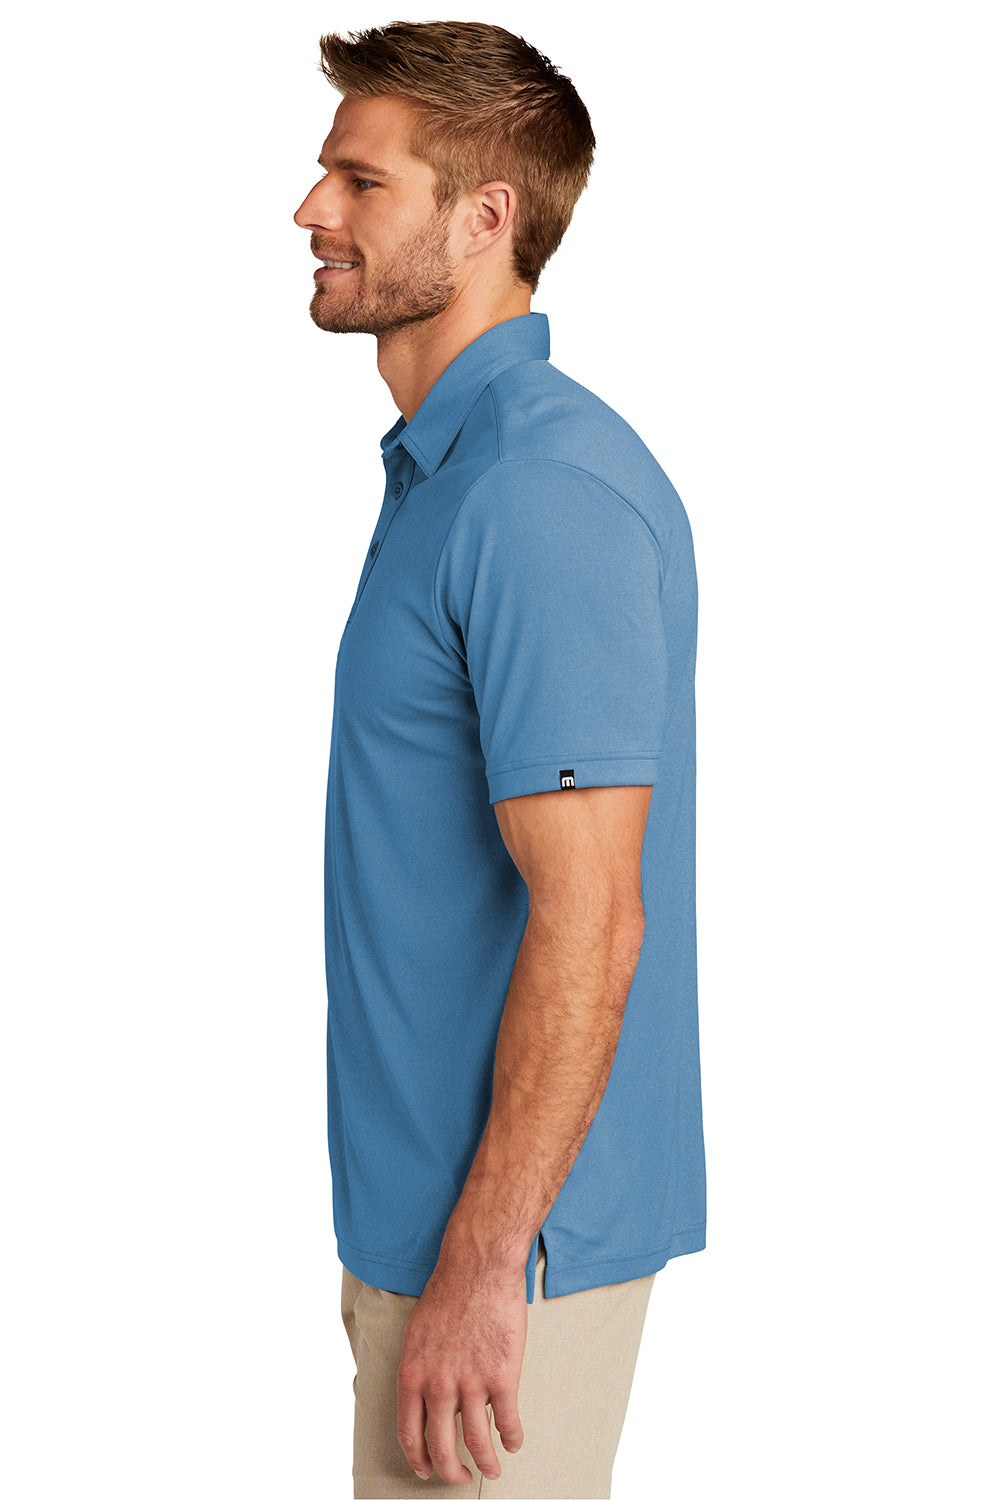 TravisMathew TM1MU410 Mens Coto Performance Moisture Wicking Short Sleeve Polo Shirt Federal Blue Model Side